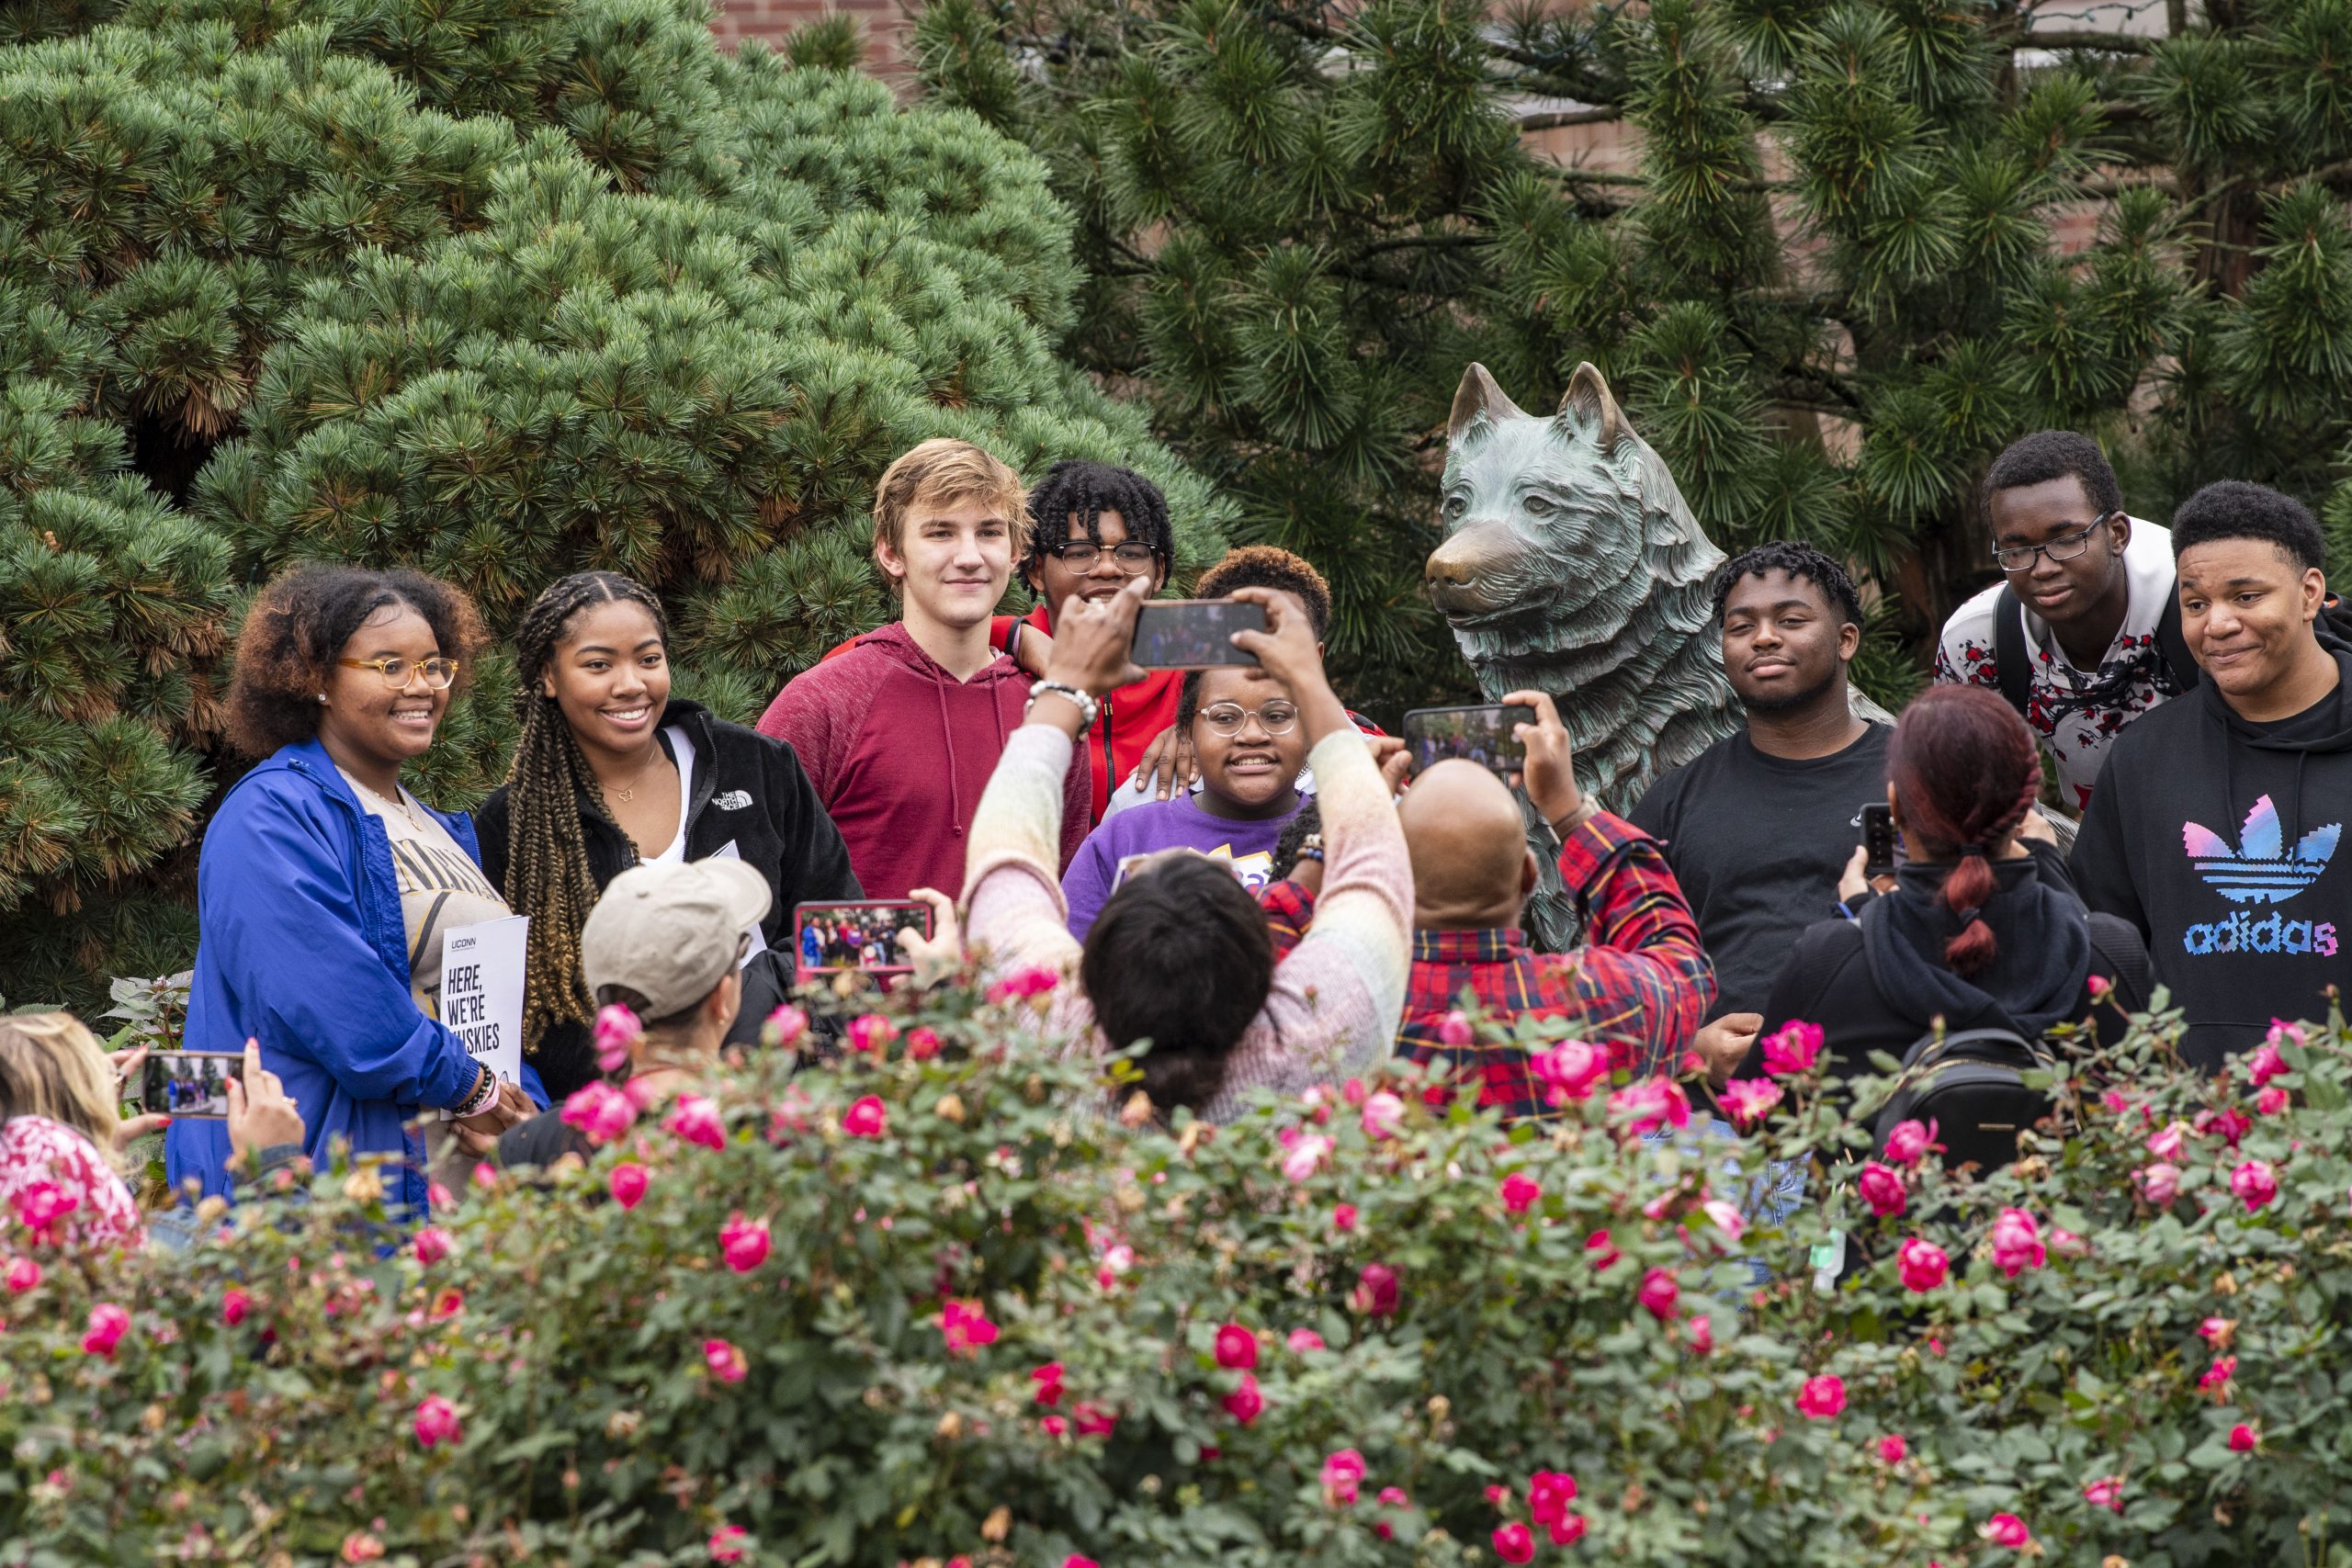 Students gathered around the husky dog statue.